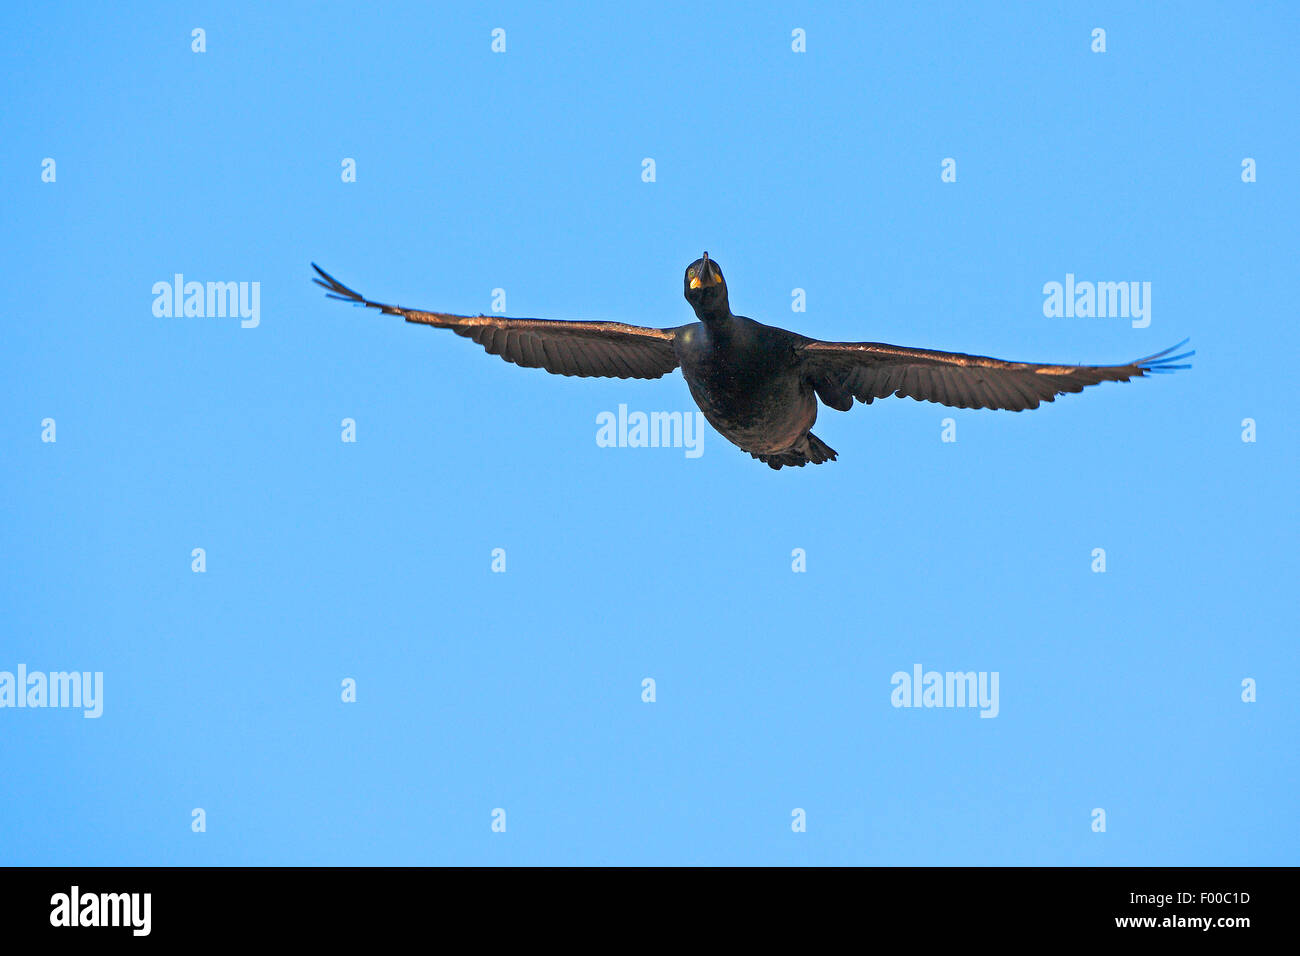 shag (Phalacrocorax aristotelis), in flight in the blue sky, Norway Stock Photo